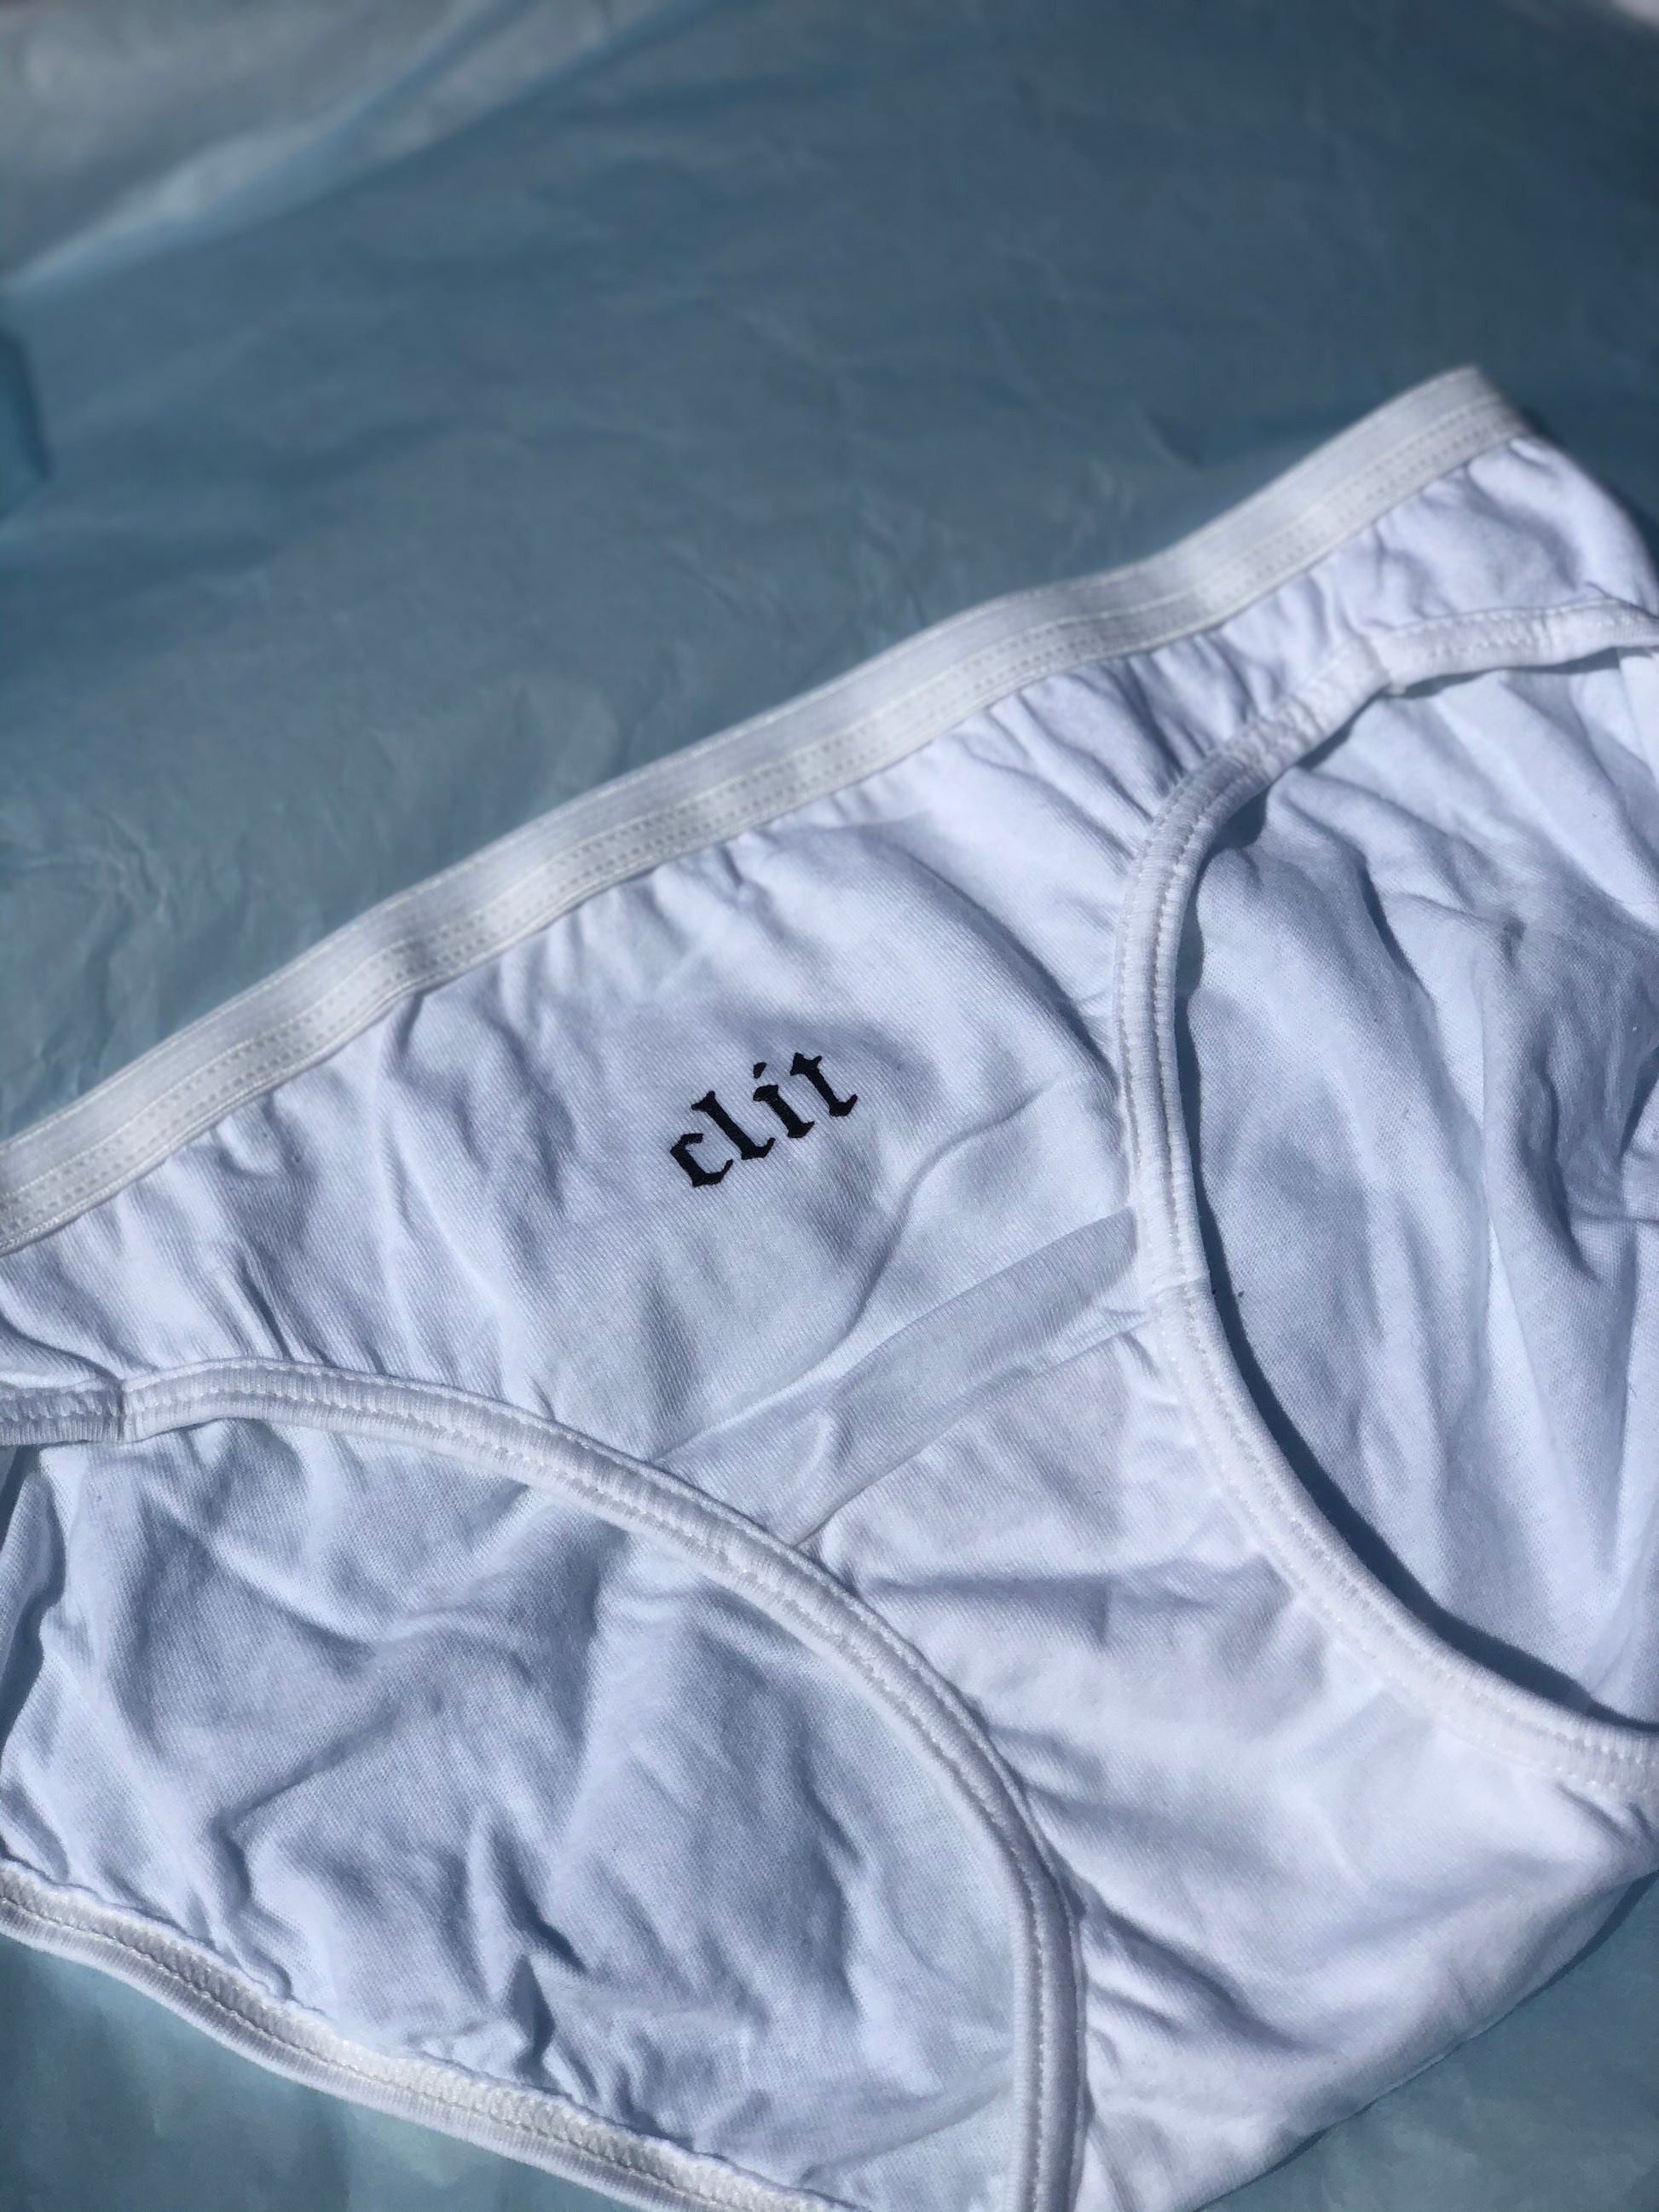 Friendly Reminder Panties - White Cotton – Speakeasy Luxe